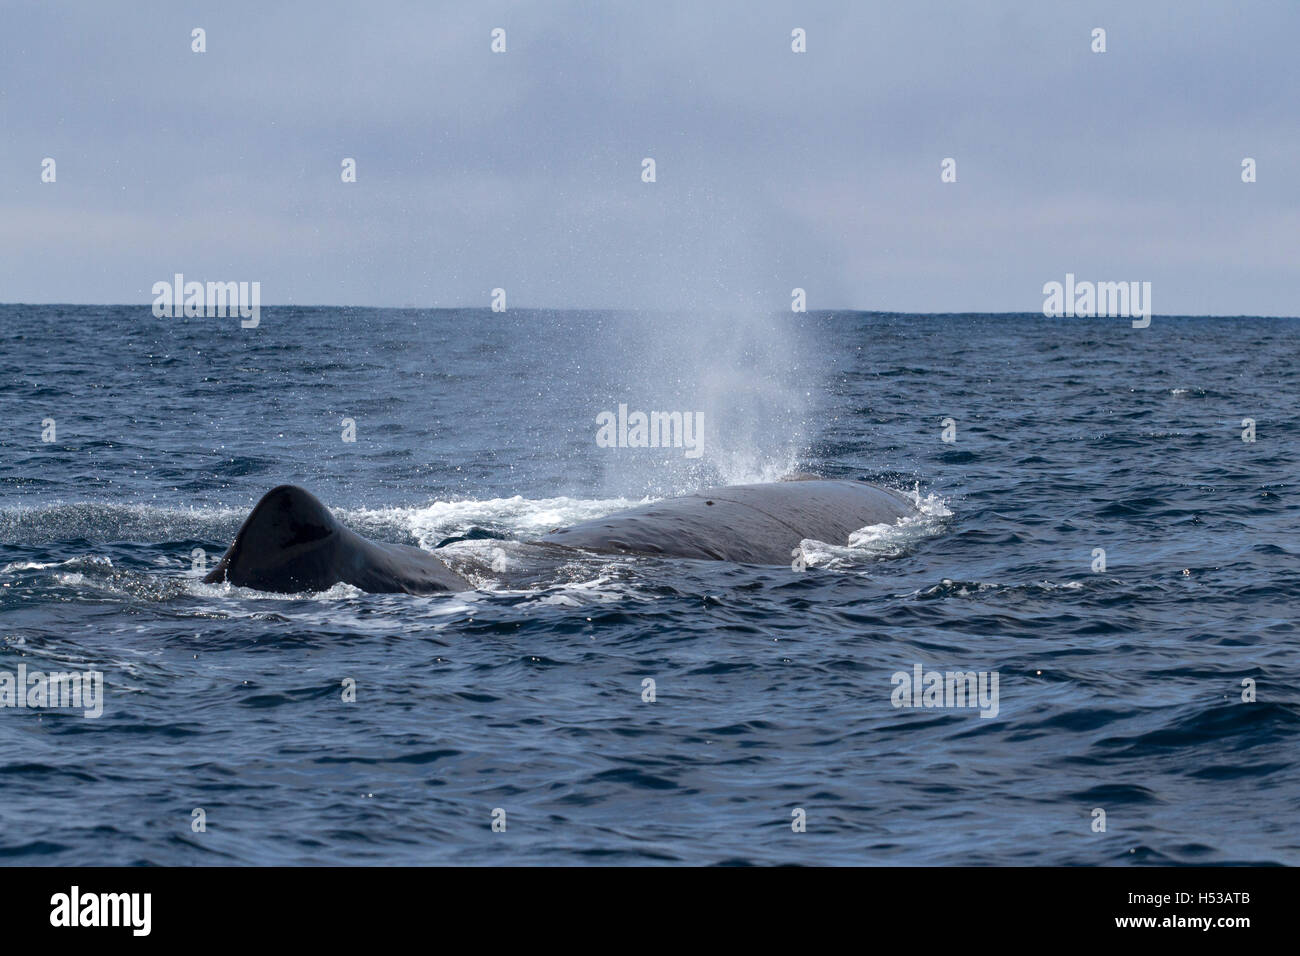 A mount of sperm a whale produces